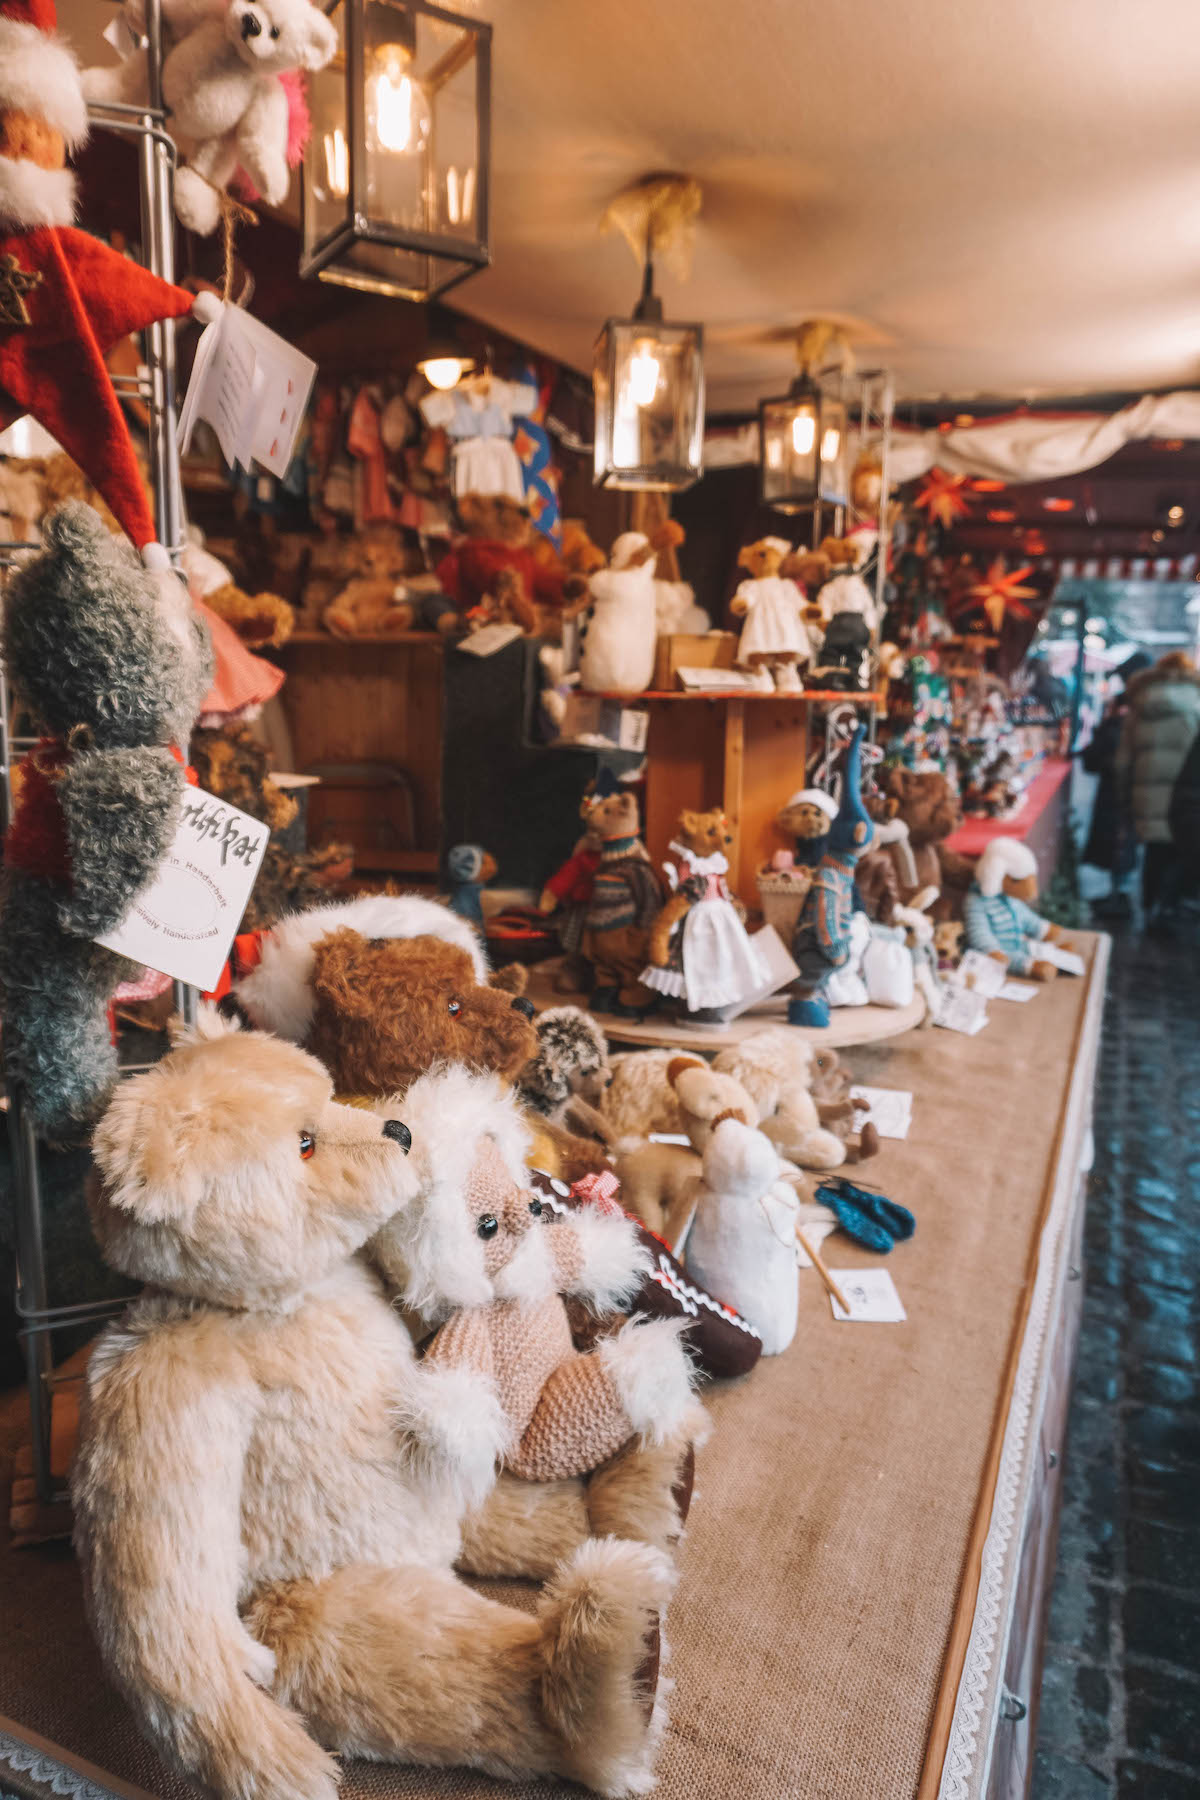 Teddy bears displayed at the Christmas market in Nuremberg, Germany